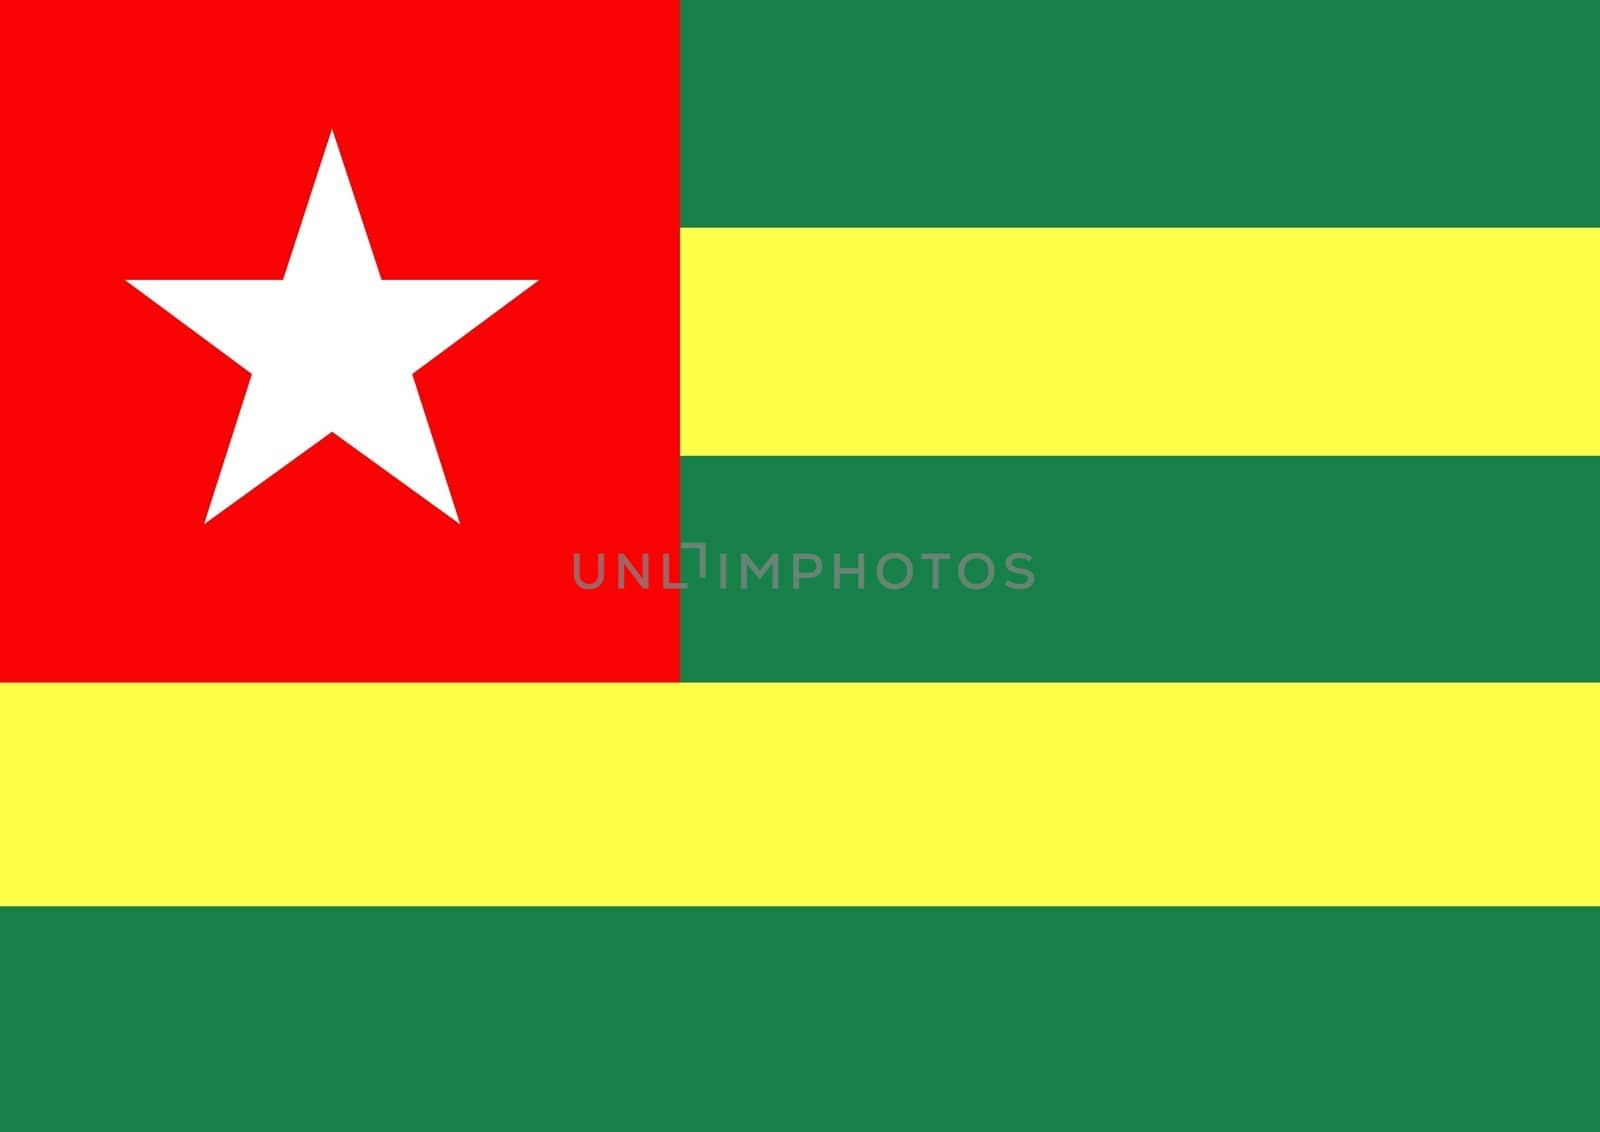 Illustration of the flag of Togo